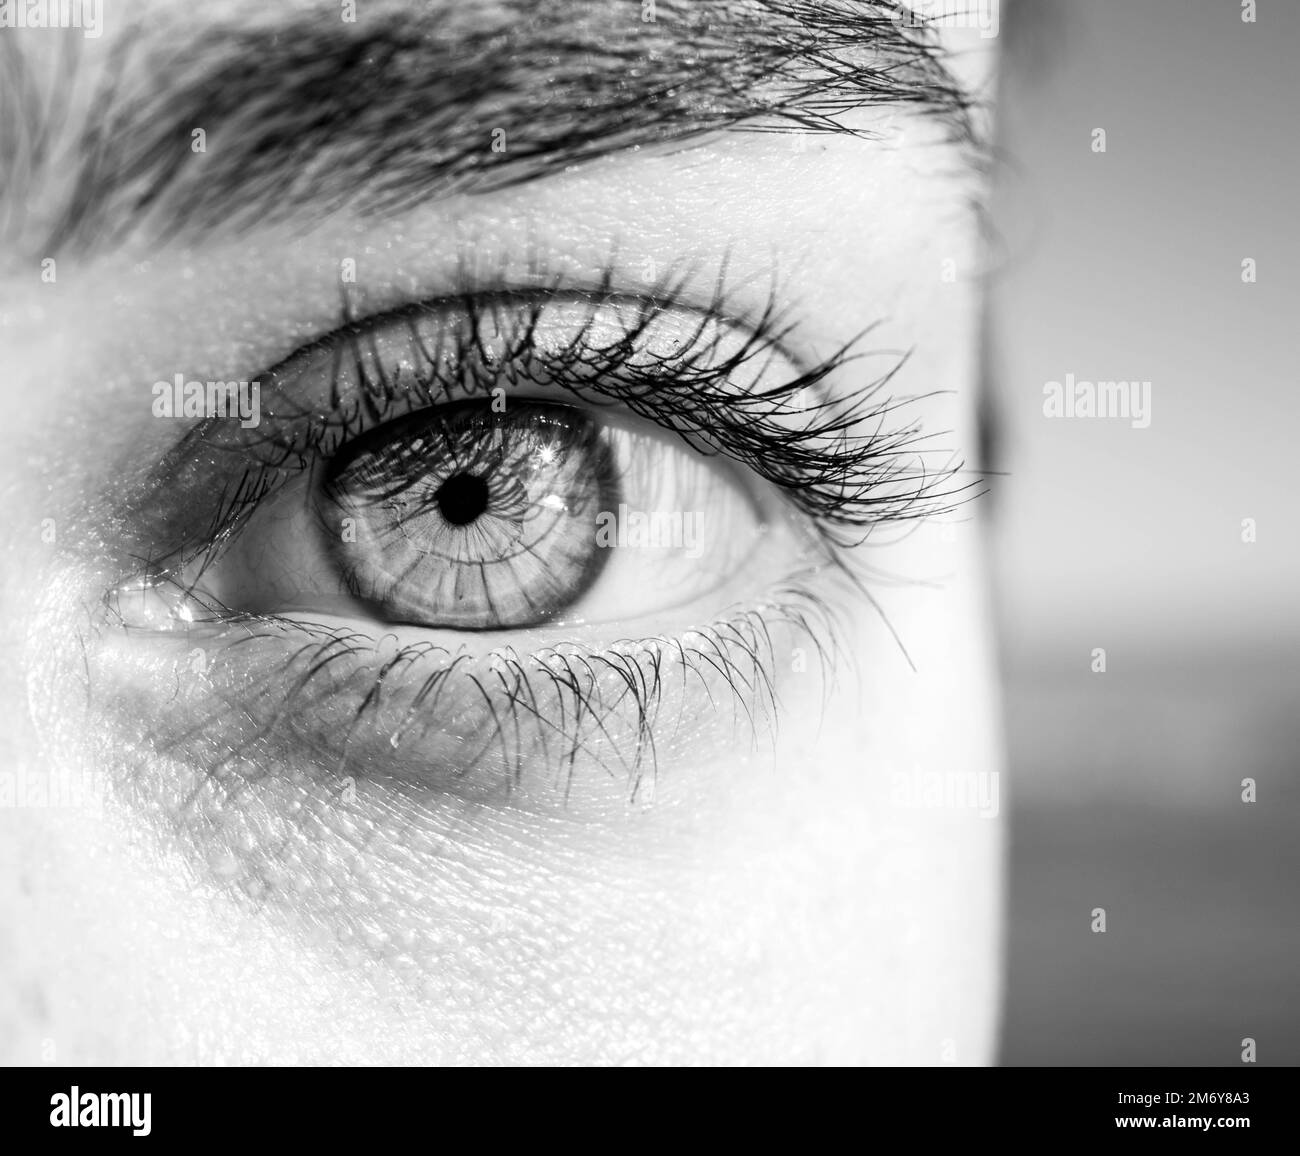 macro photography of a female eye. Human eye texture. eye pupil. Human eyelashes. Brown eye close-up. Eye background. Stock Photo